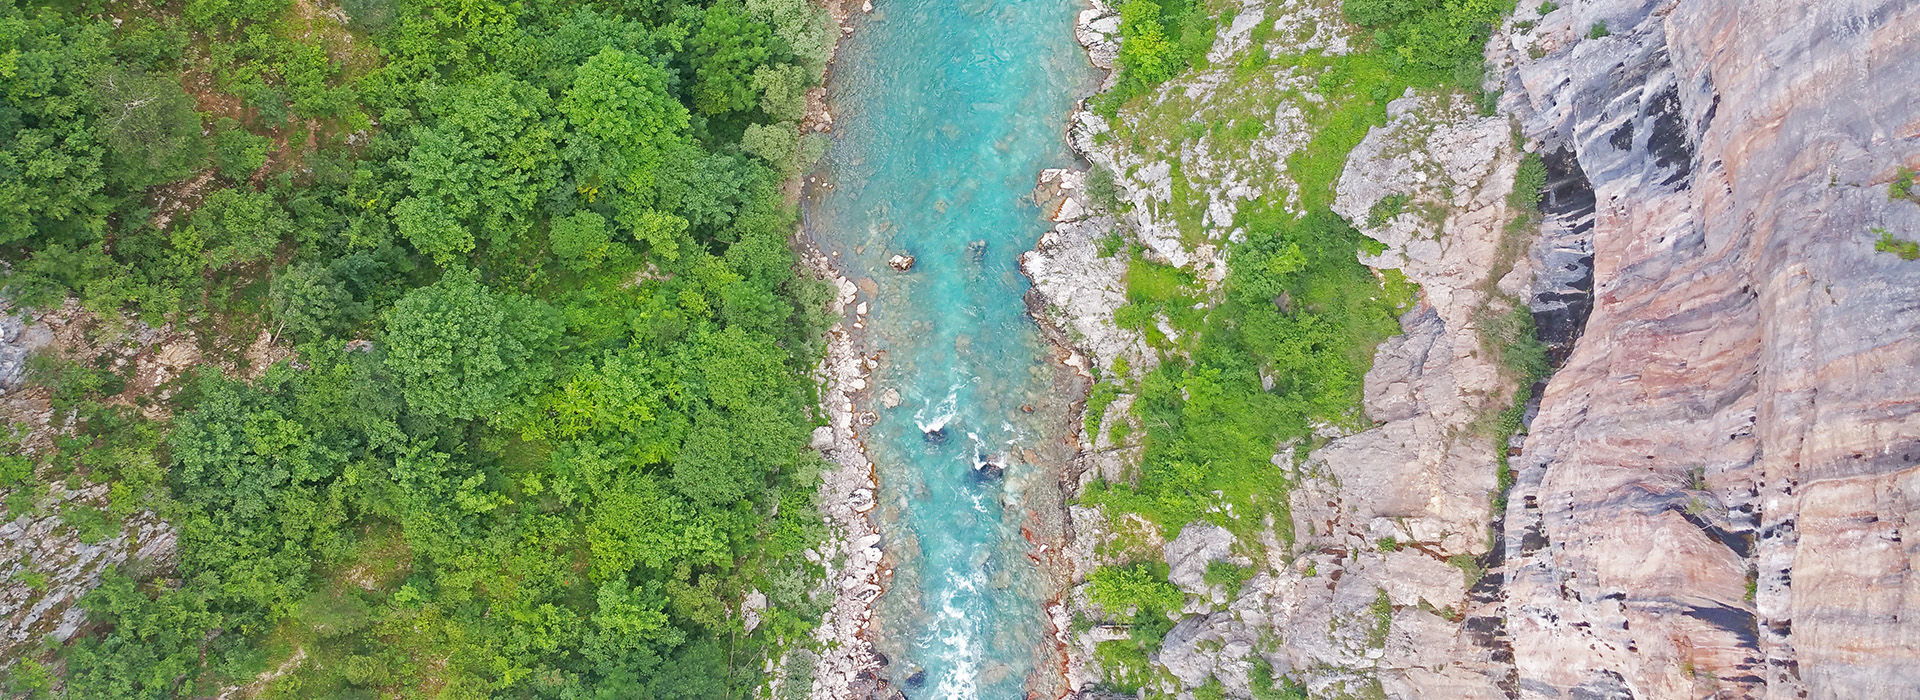 tara-river